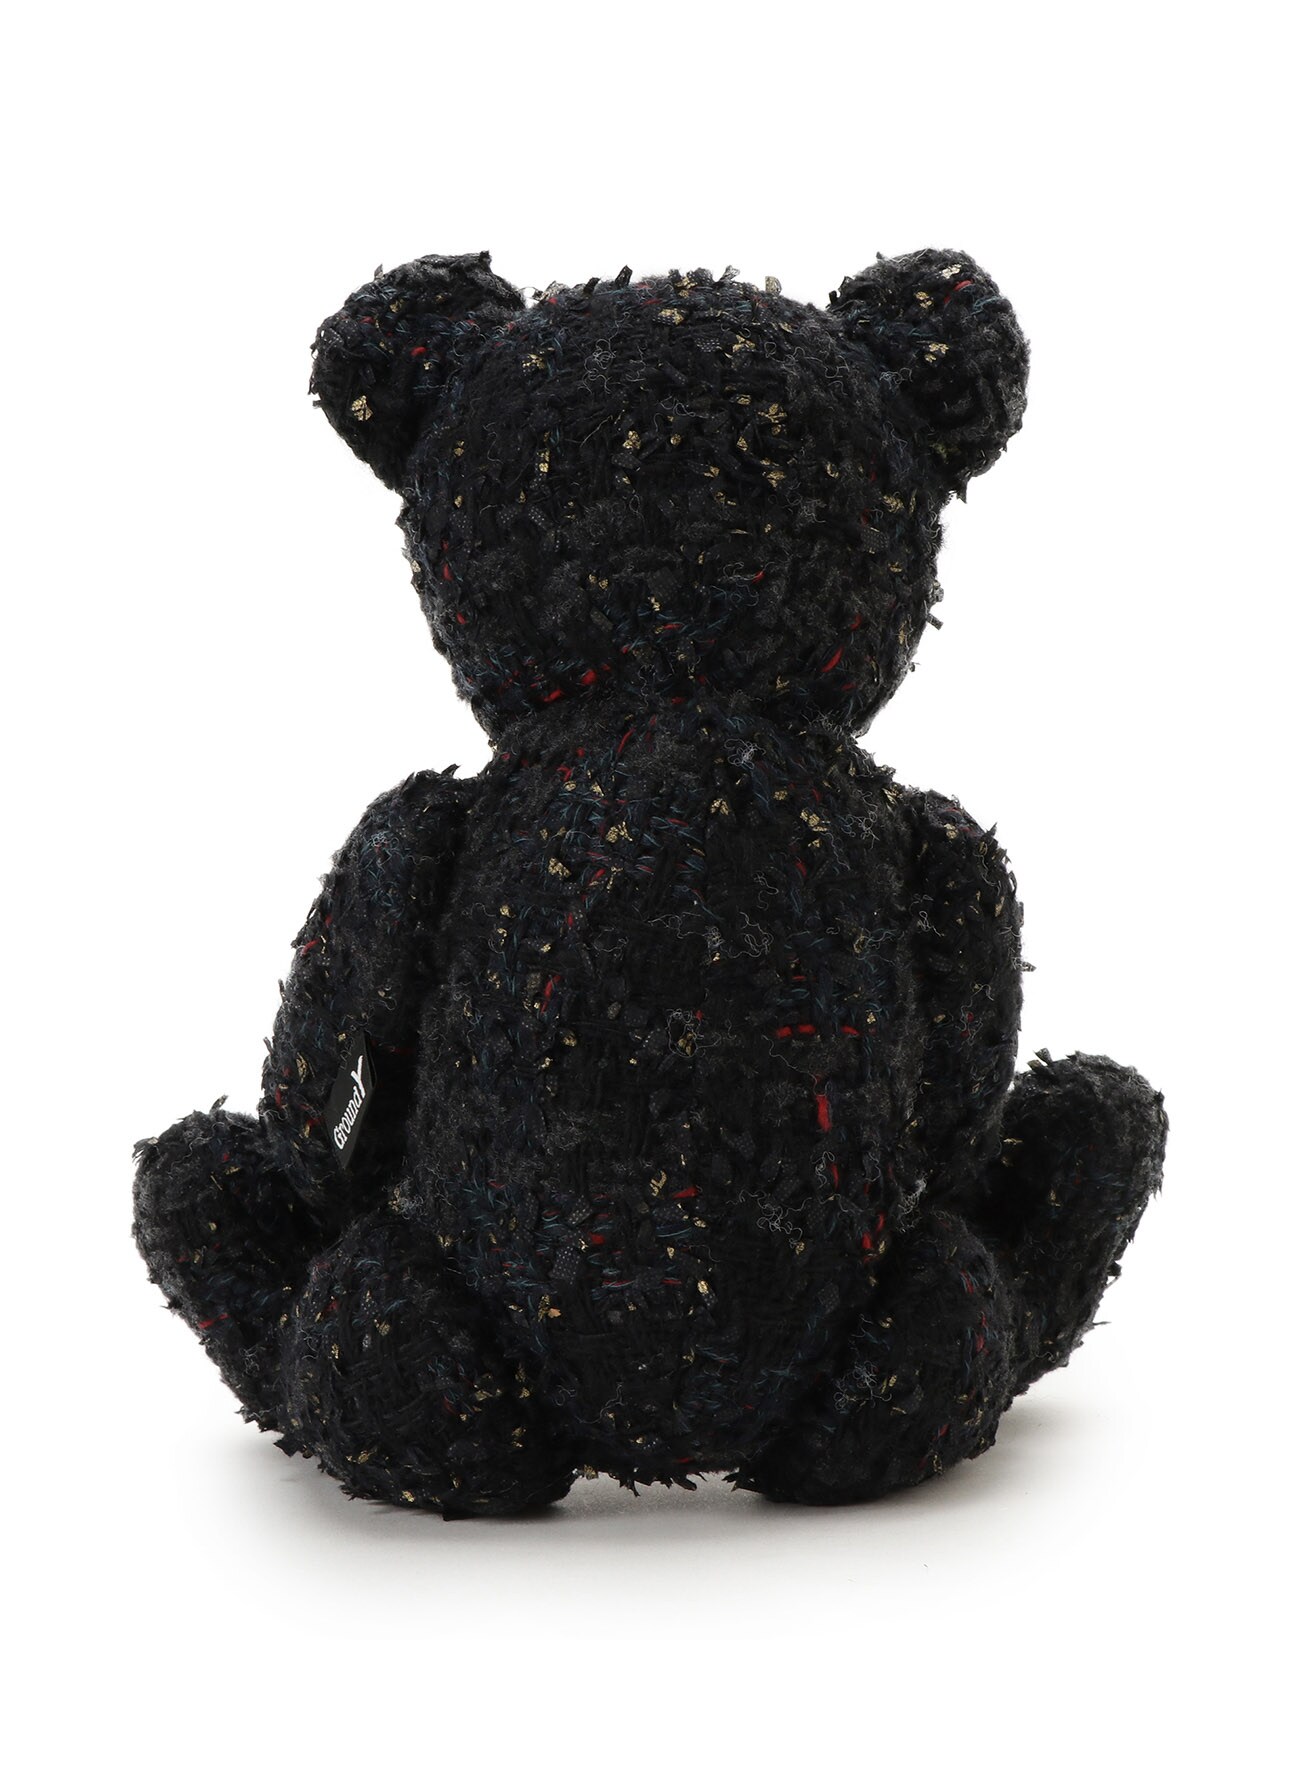 Multi tweed Teddy bear large